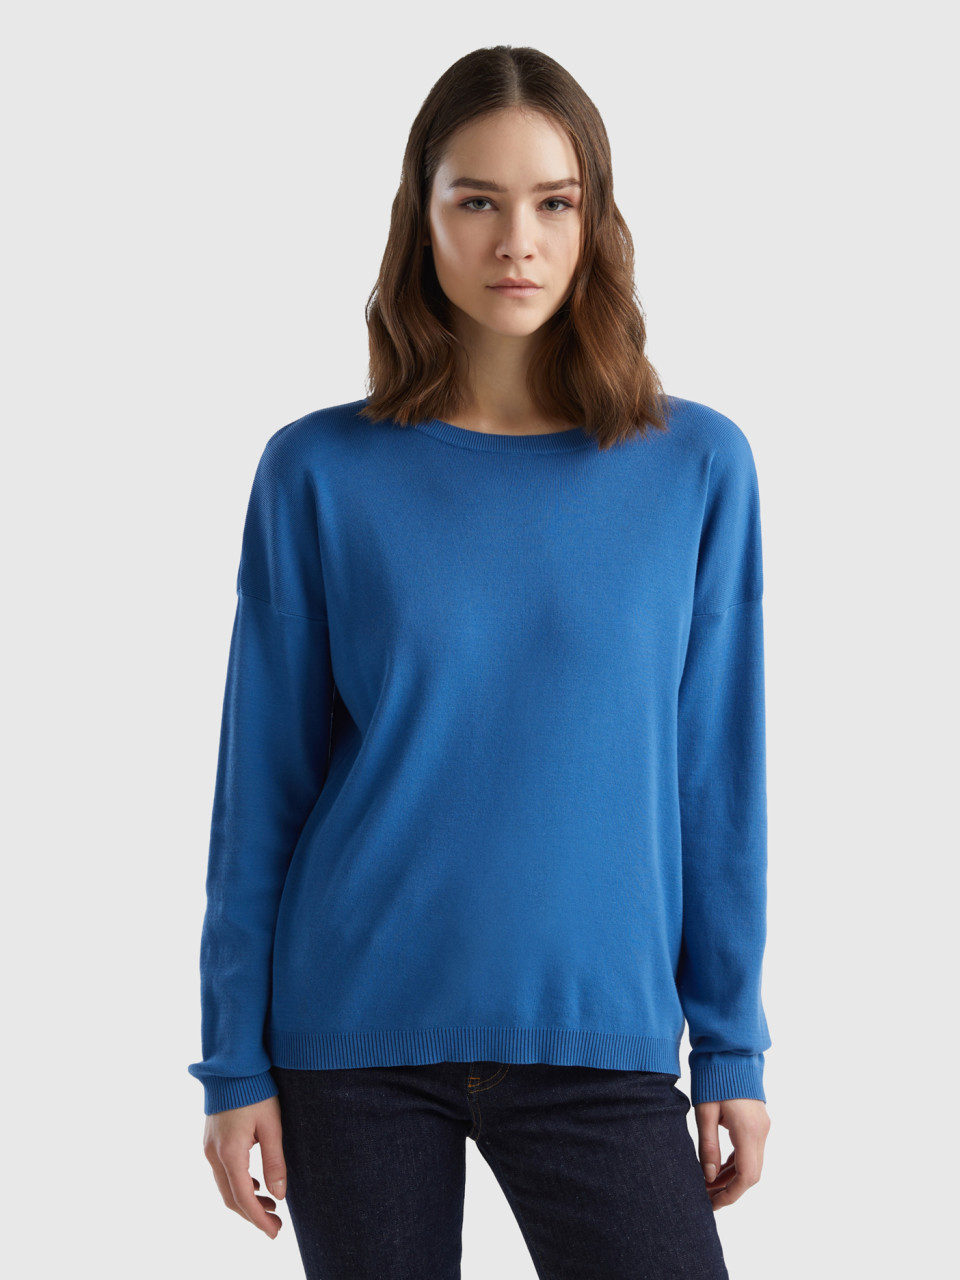 Benetton, Cotton Sweater With Round Neck, Blue, Women